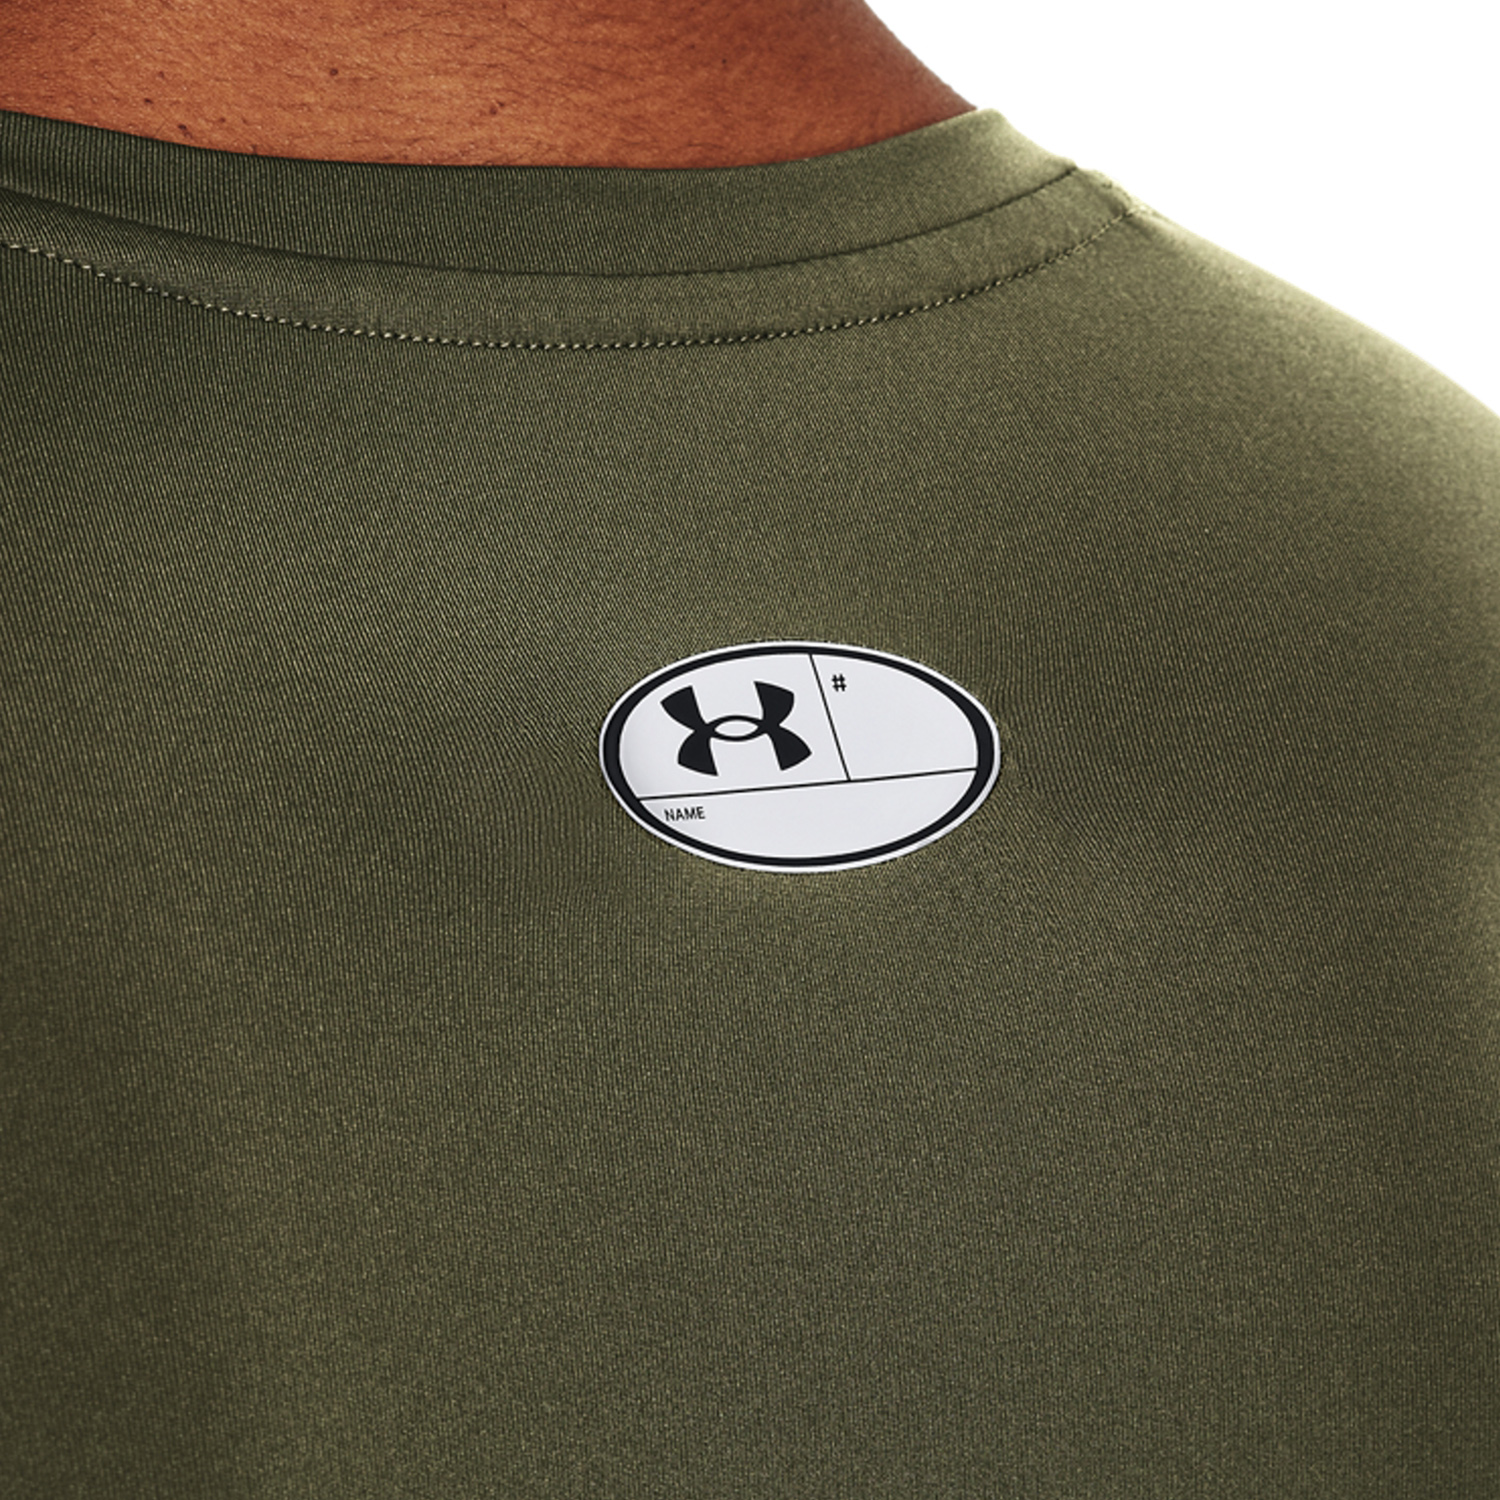 Under Armour HeatGear Compression Camisa - Marine Od Green/White